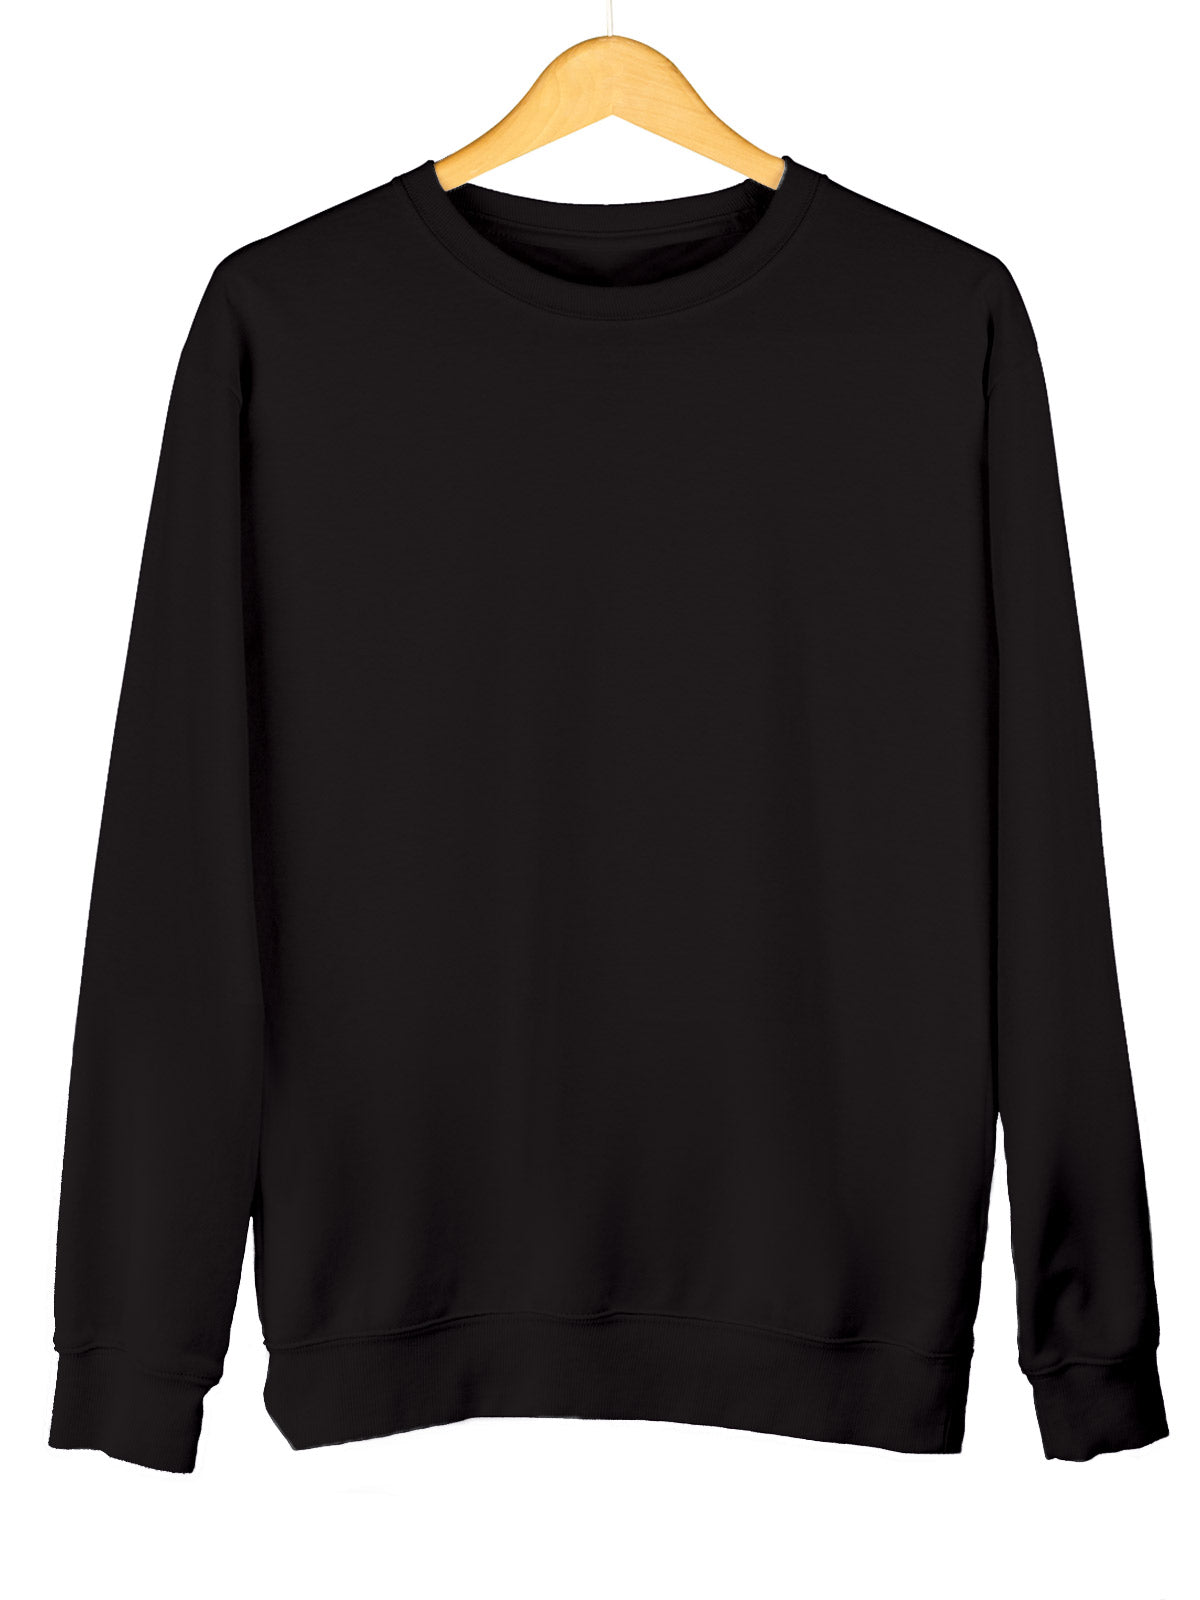 Black & Frosted Mint Unisex Plain Sweatshirt combo